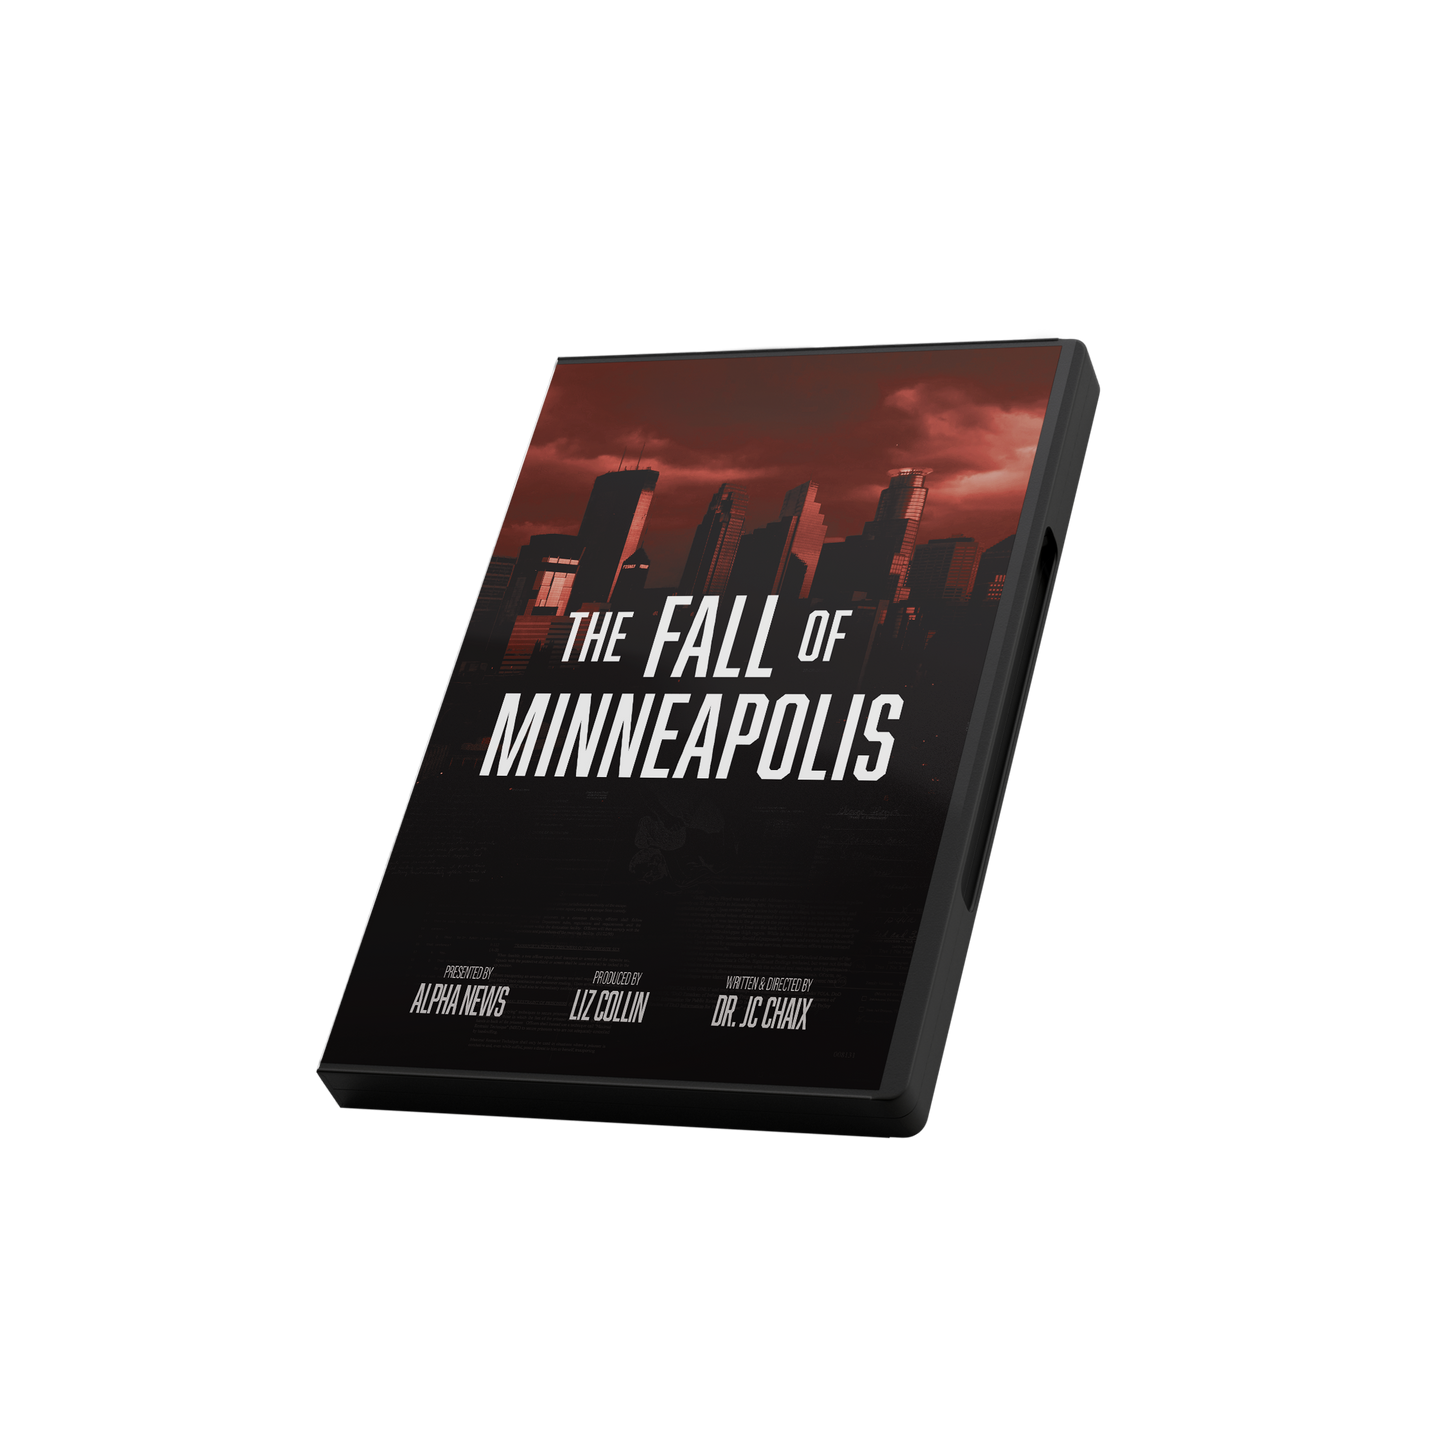 The Fall of Minneapolis DVD